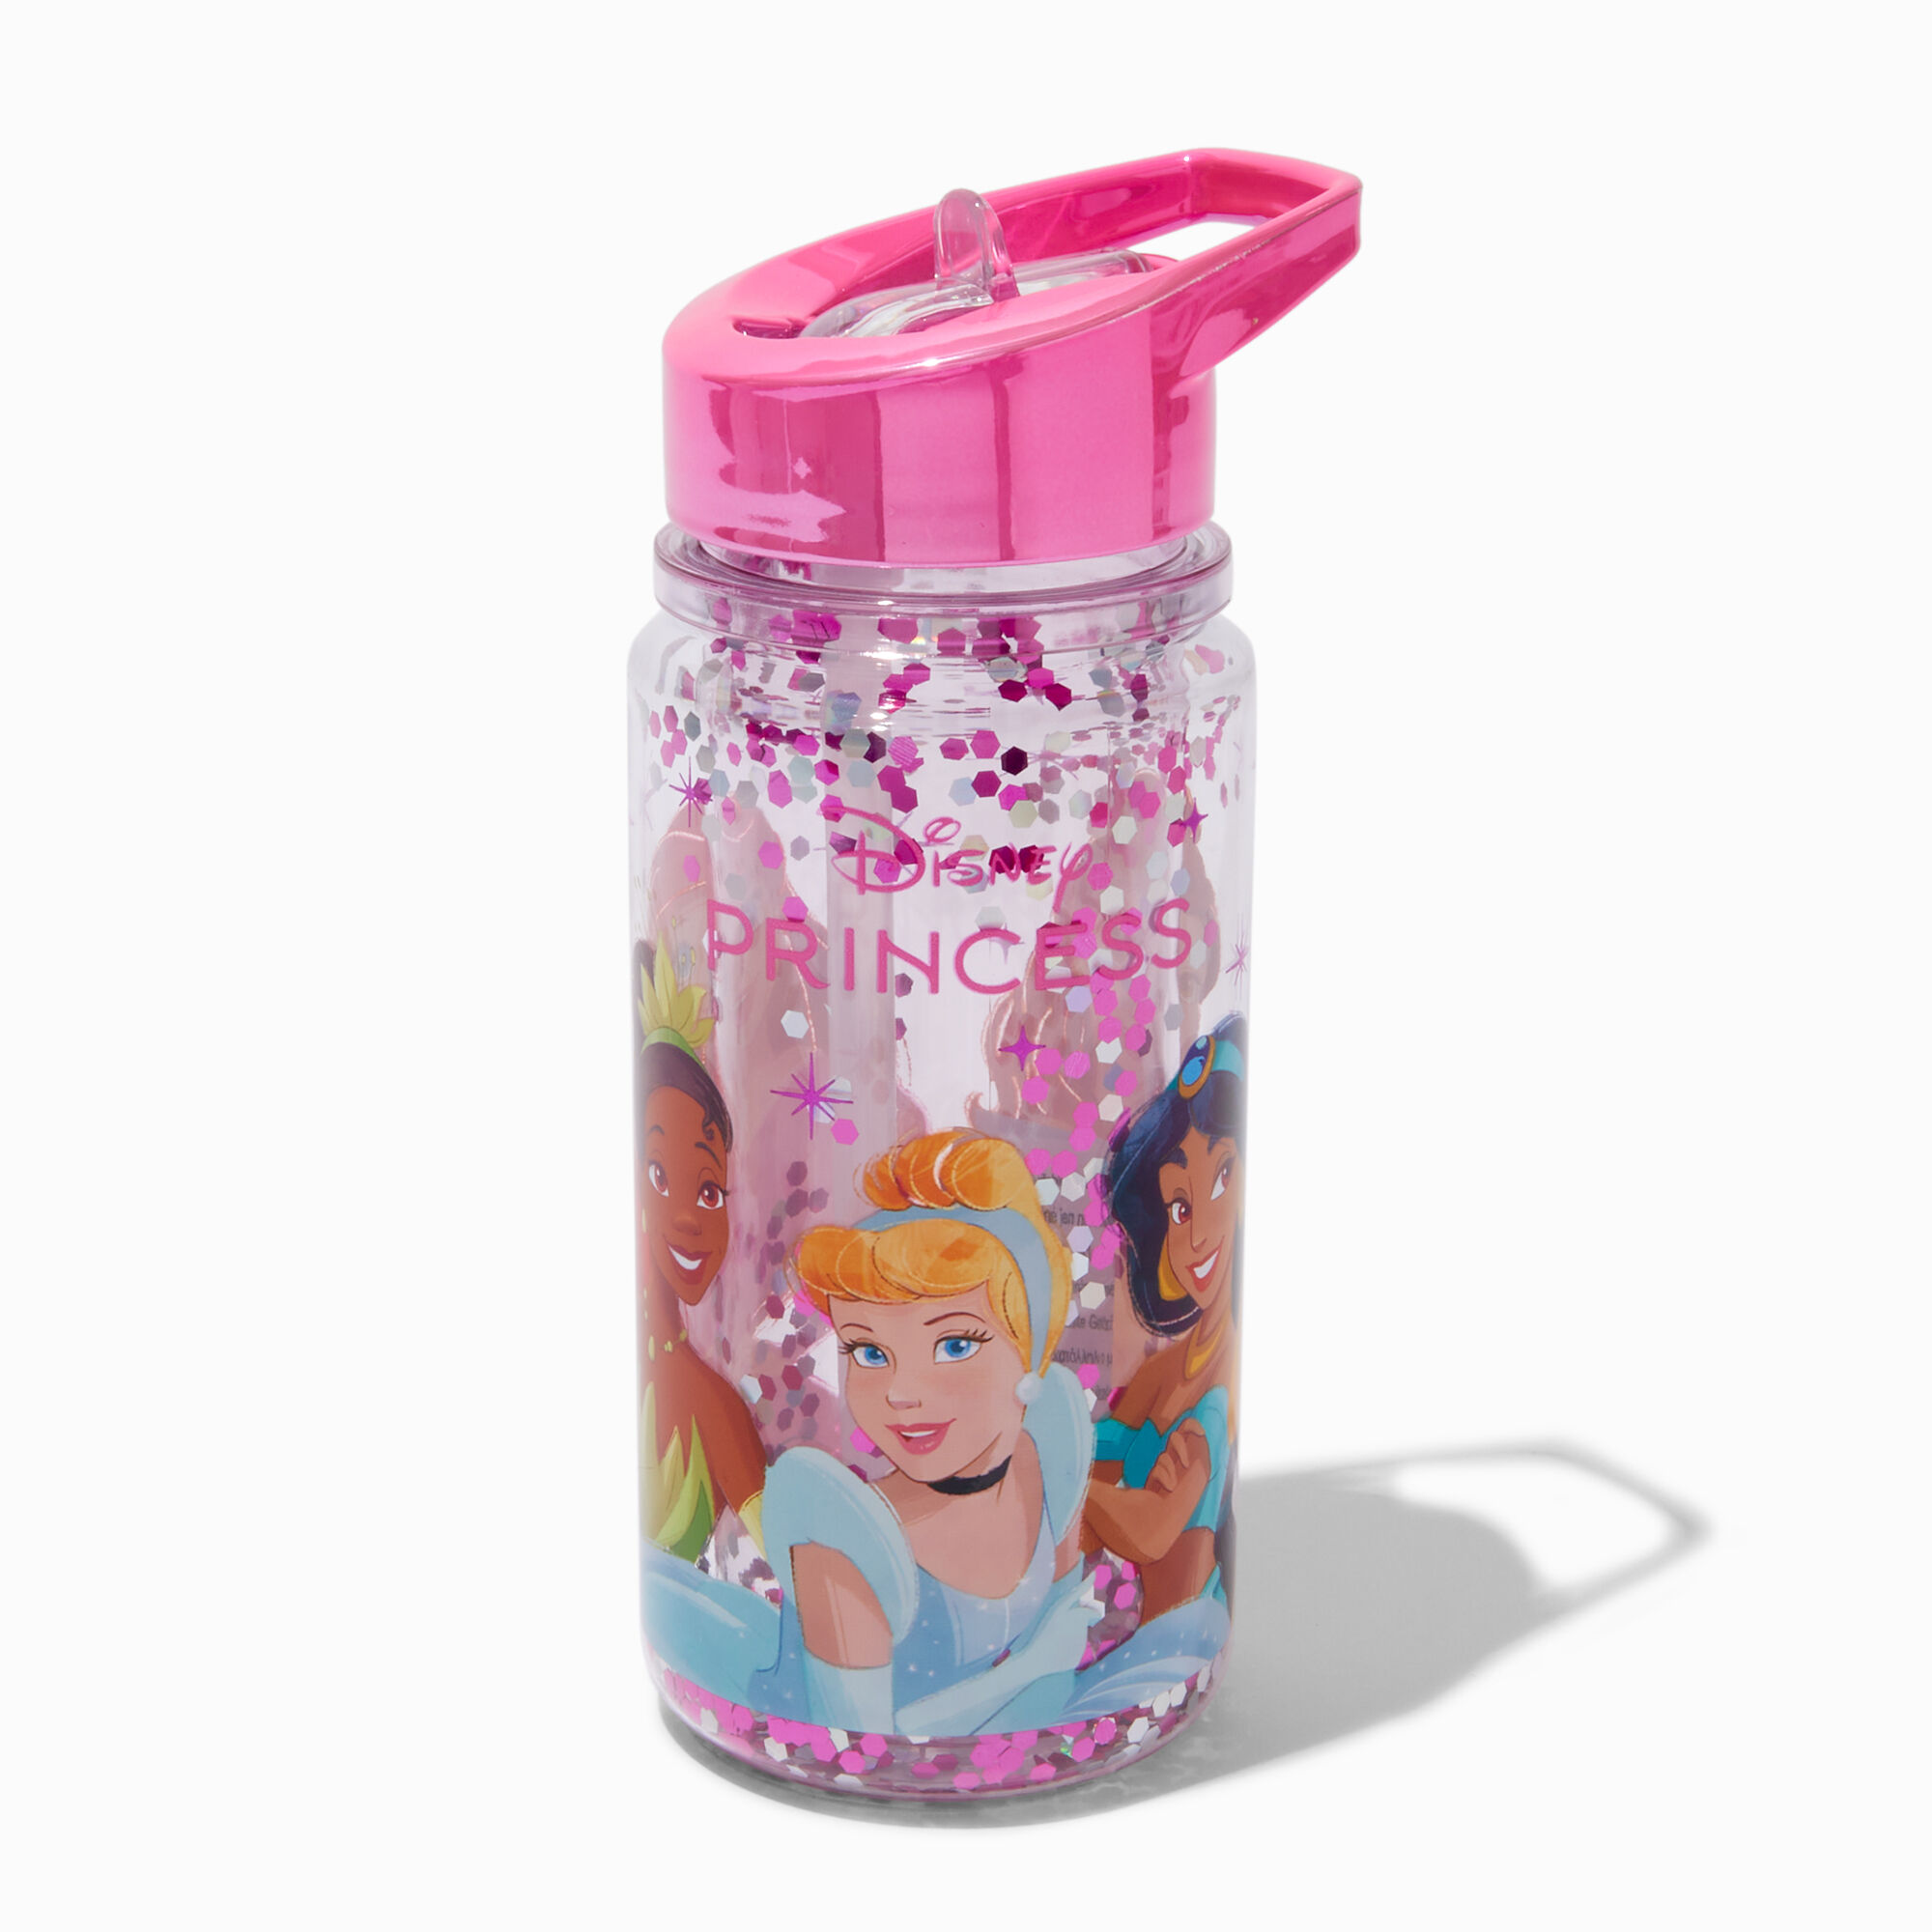 View Disney Princess Claires Exclusive Water Bottle information